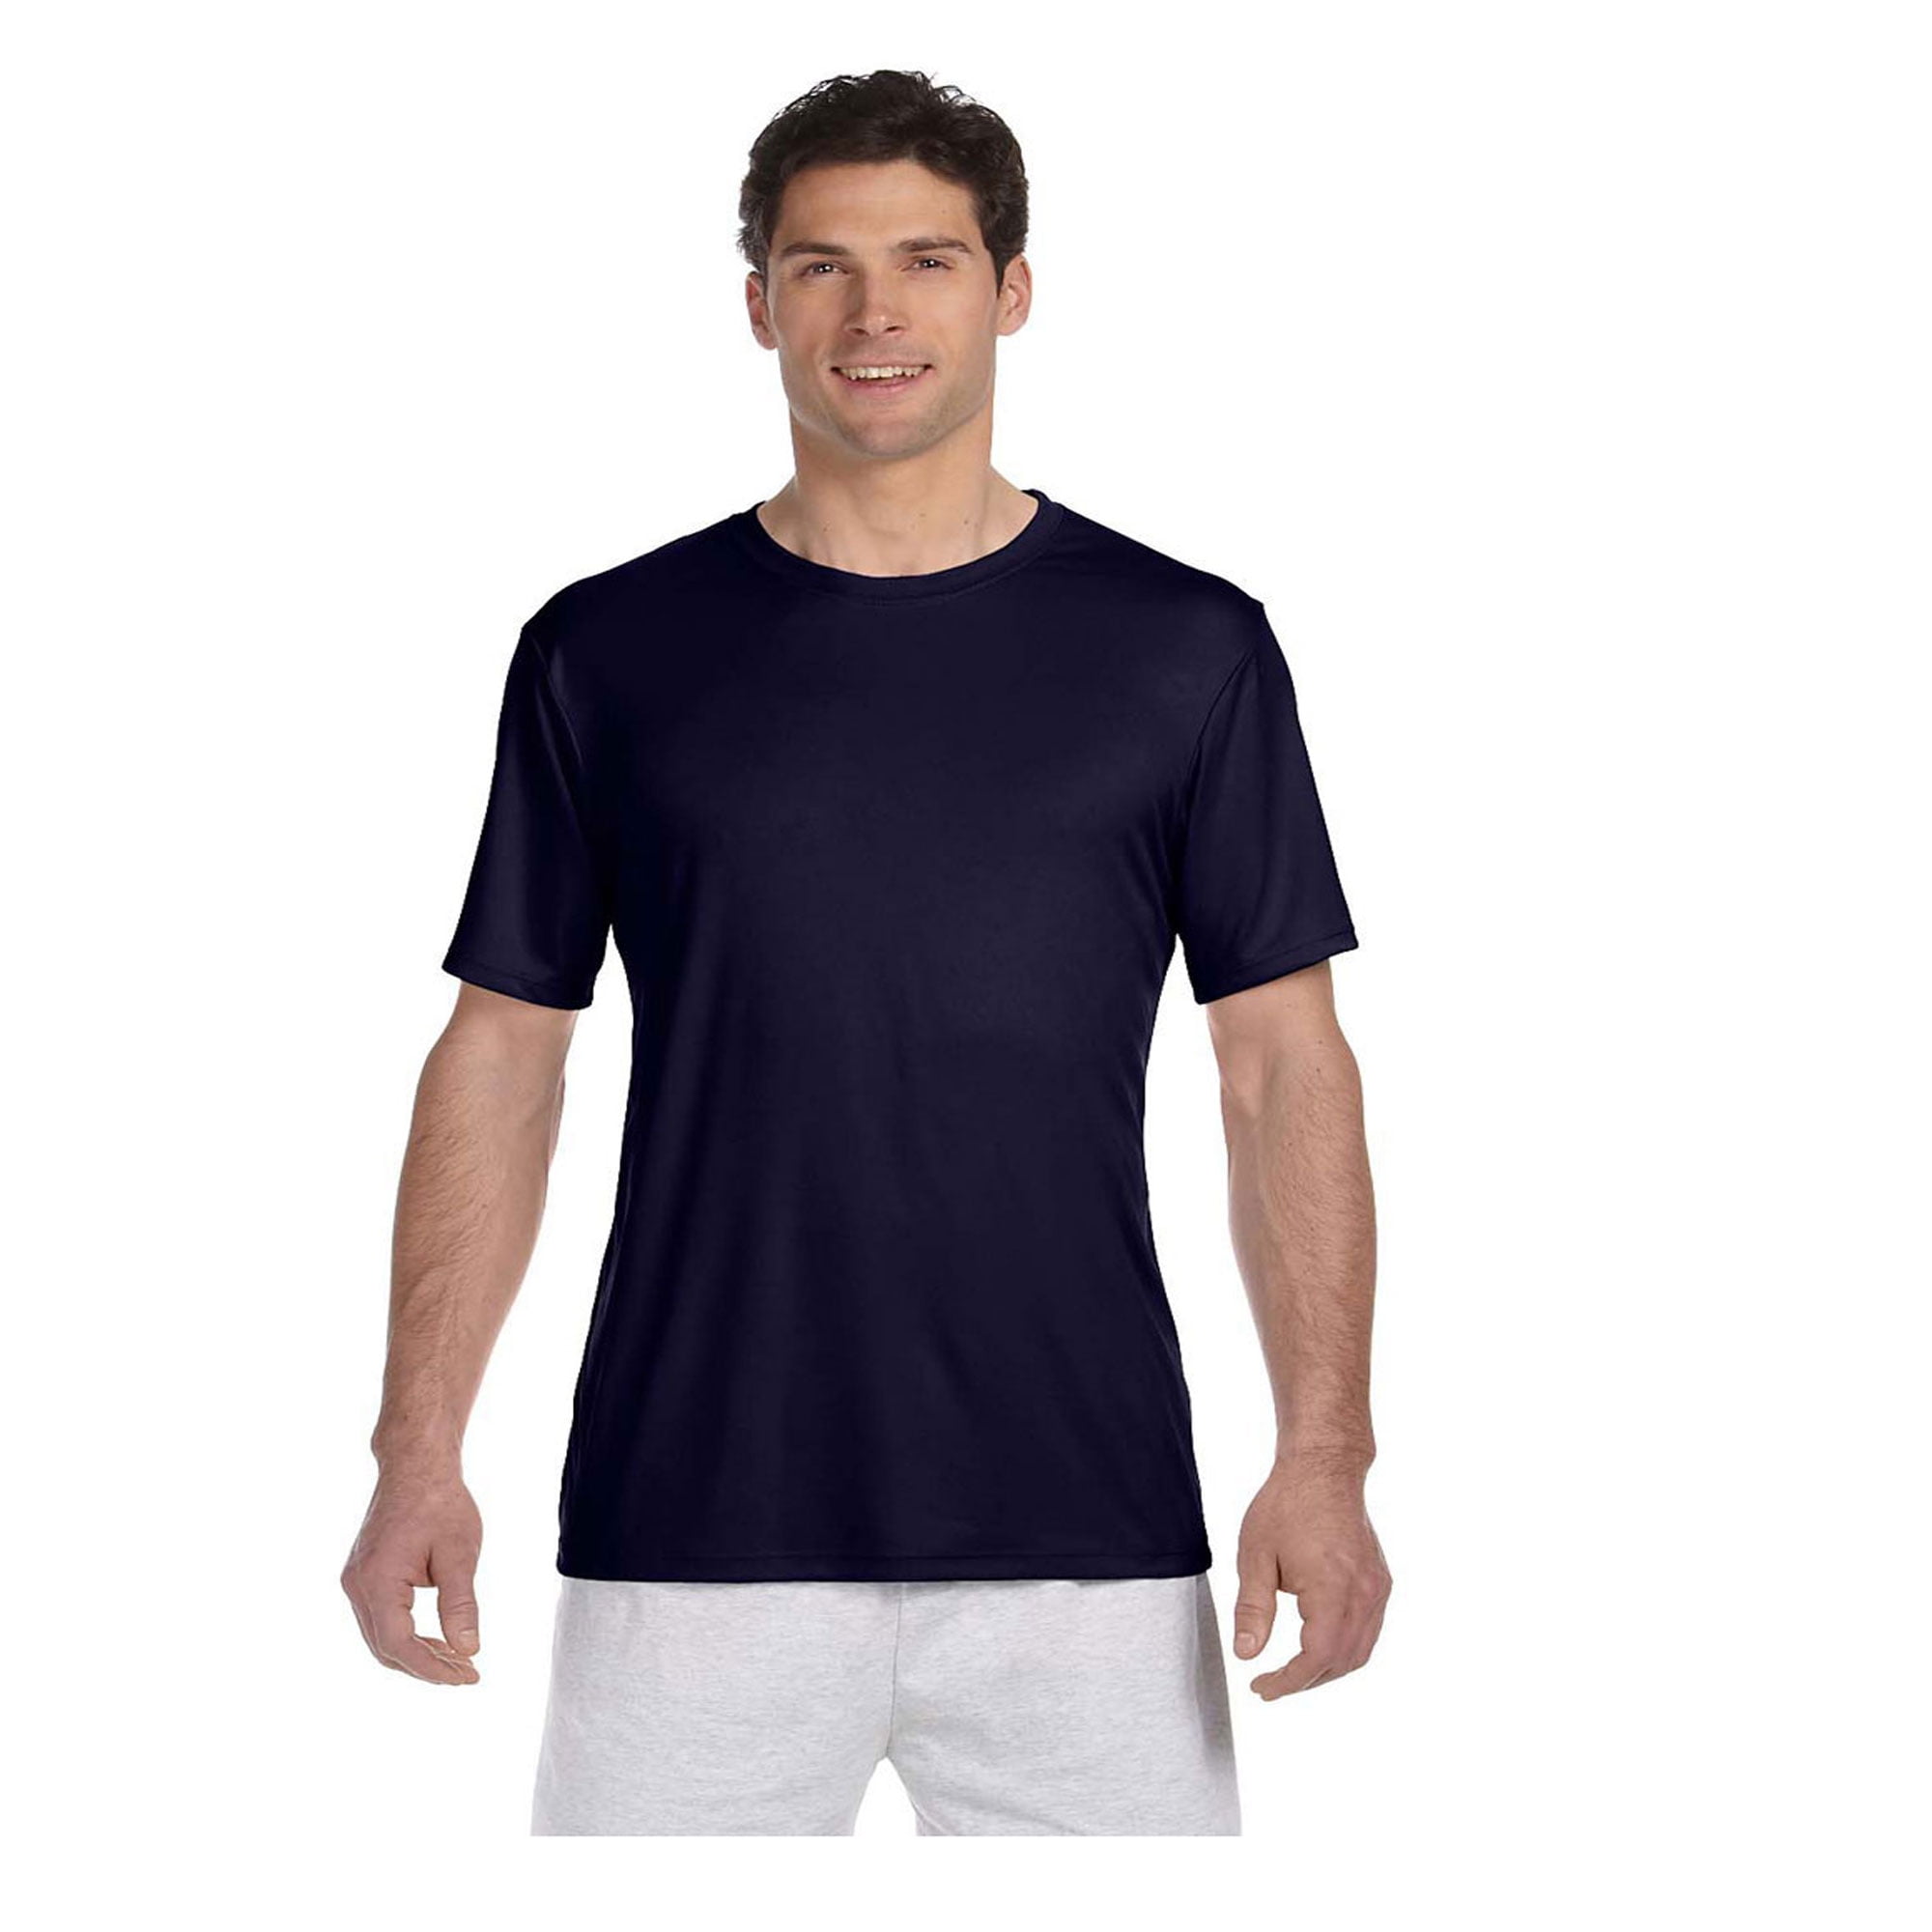 dry fit shirts walmart